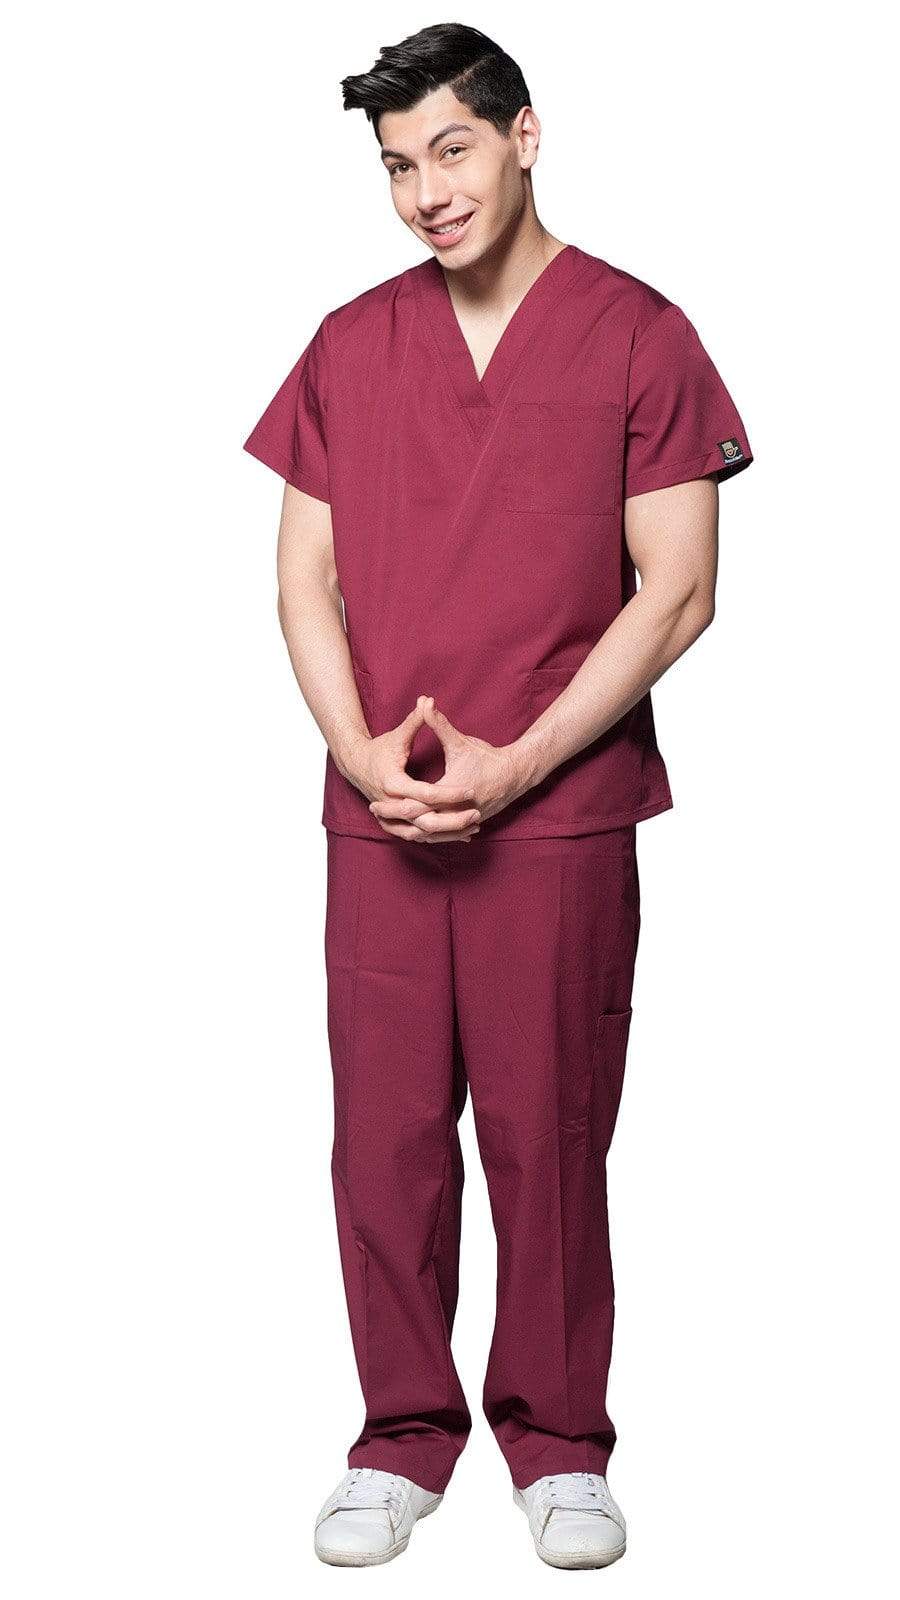 Dress A Med Men's Multi-Use Pockets Classic Uniform Scrubs